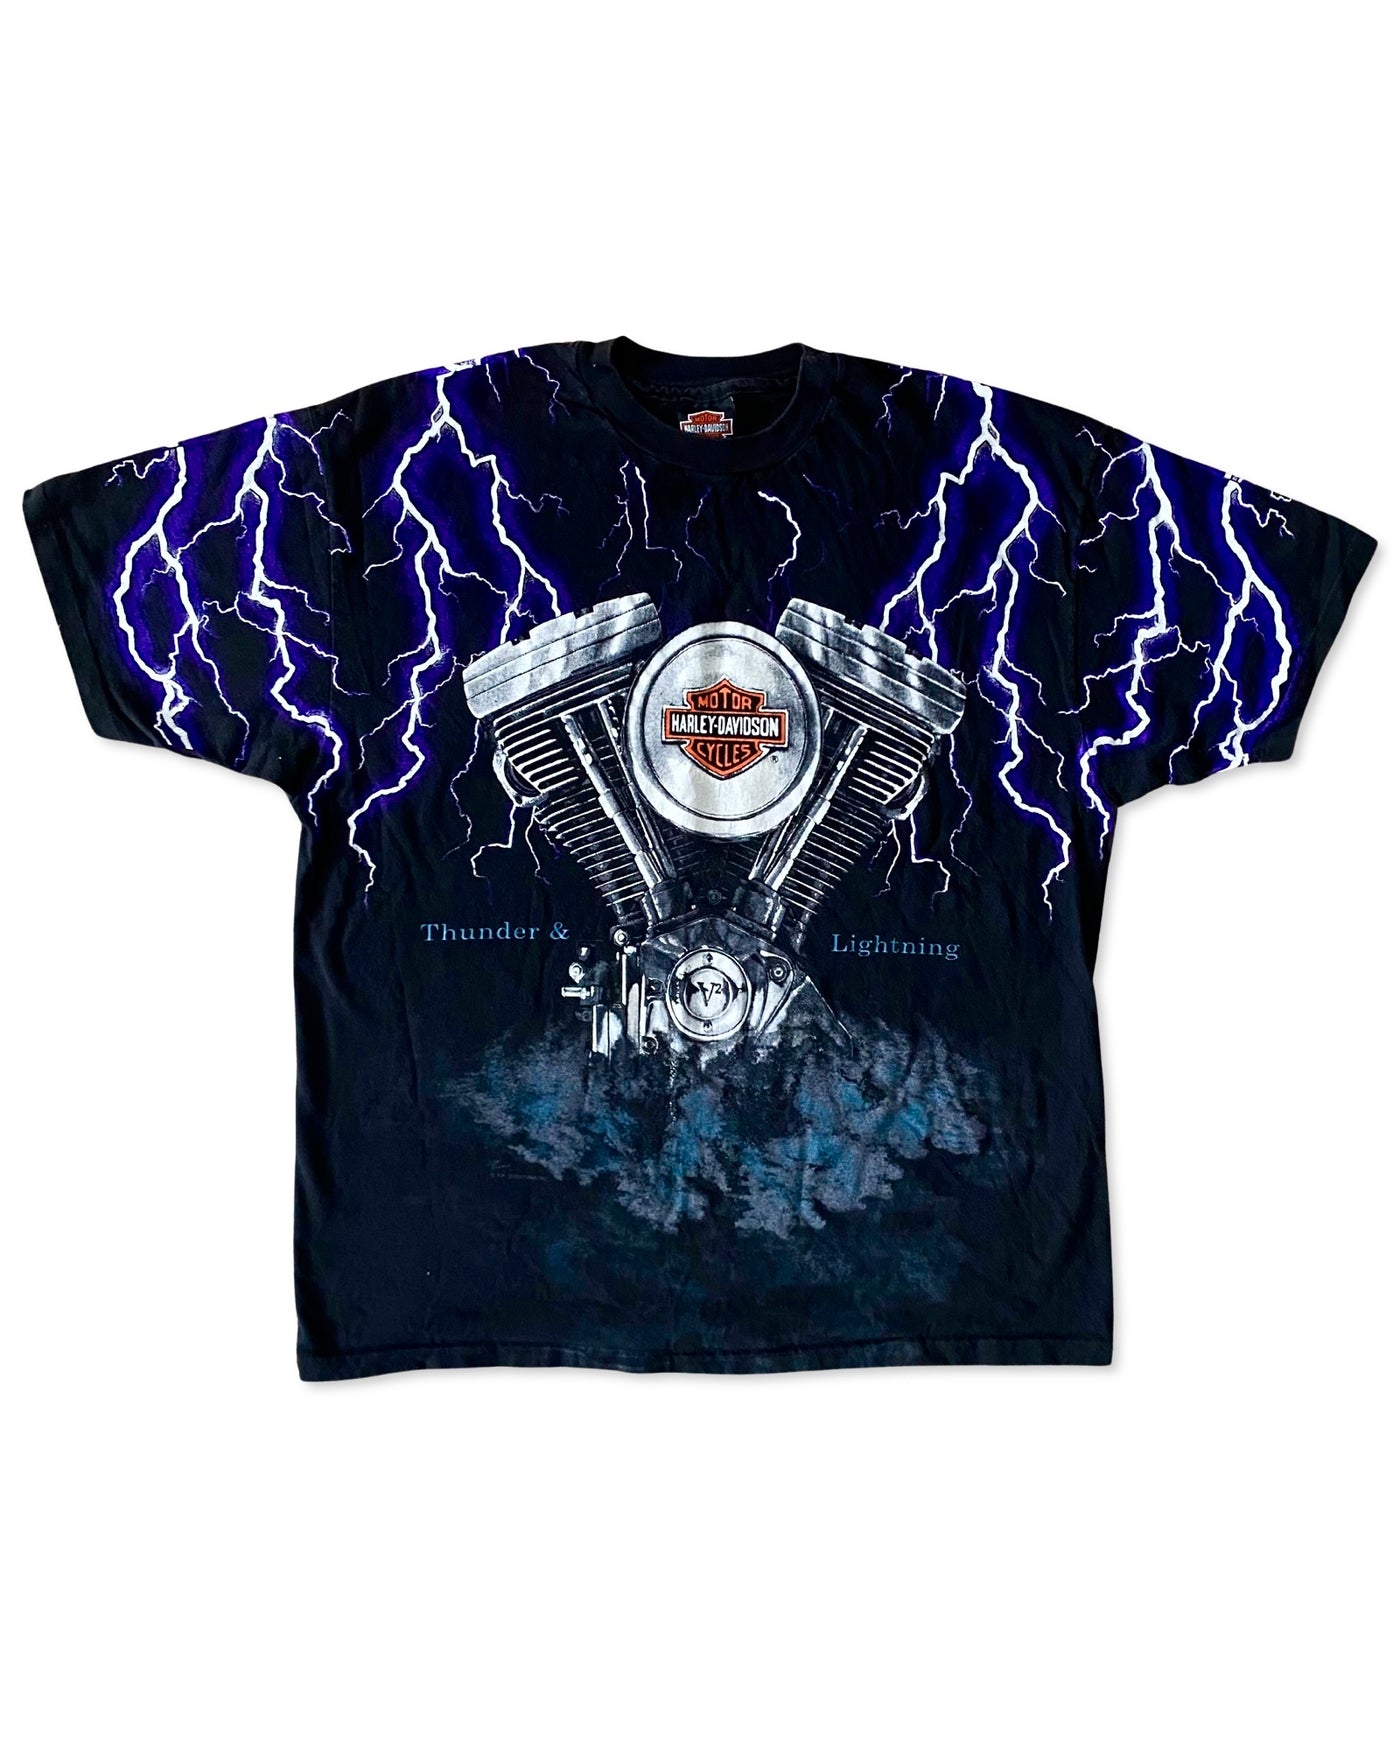 Vintage 90s Harley Davidson Thunder & Lightning Plattsburgh NY T-Shirt